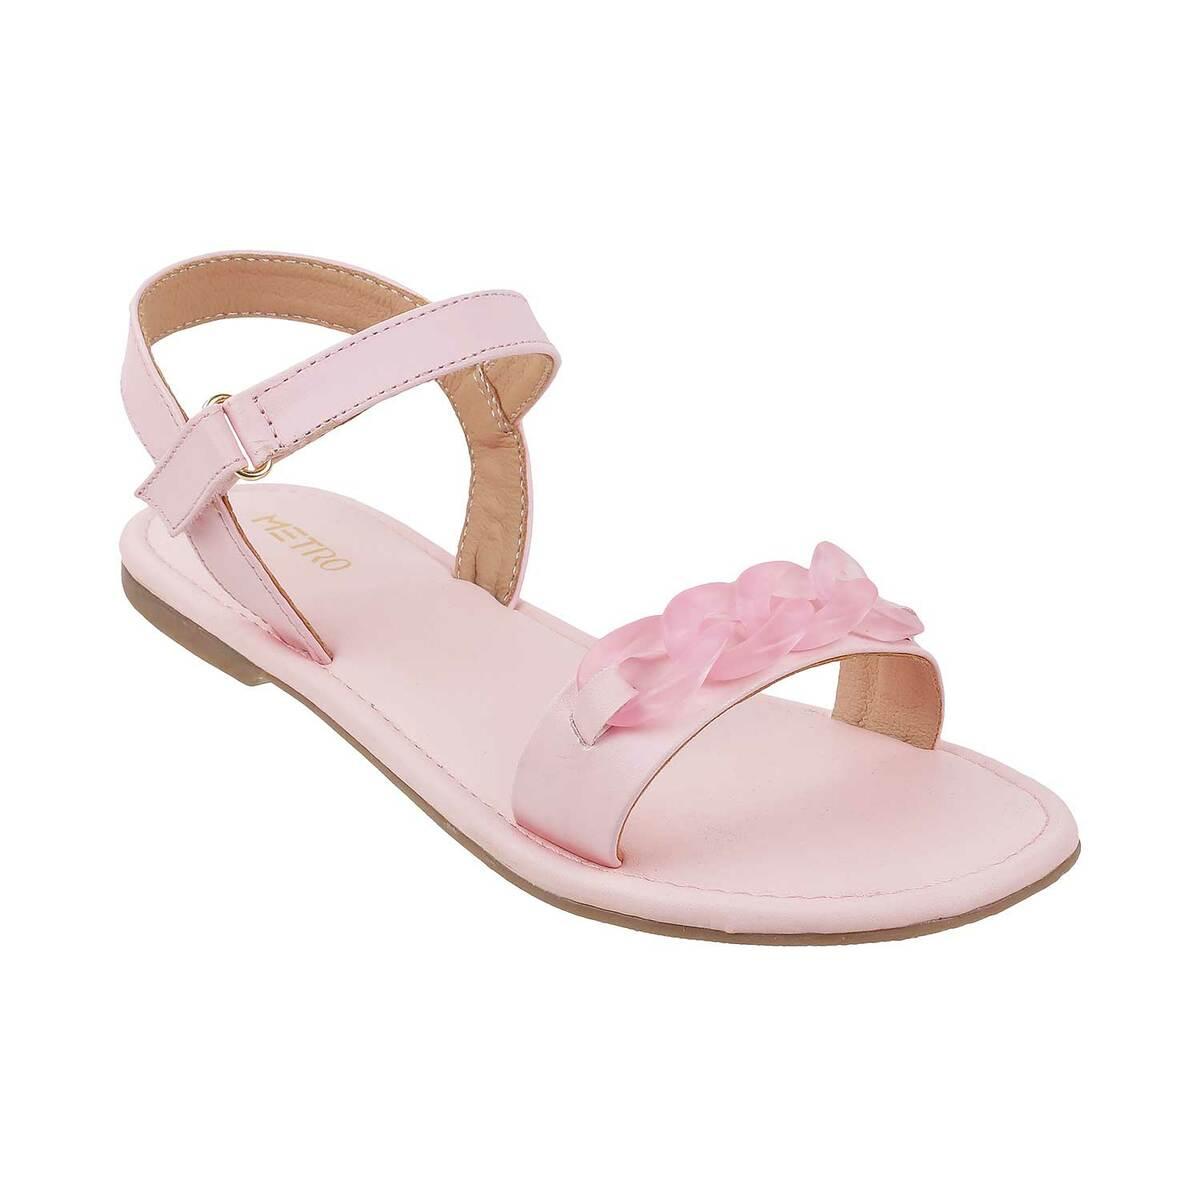 Buy Girls Pink Casual Sandals Online | SKU: 57-4641-24-30-Metro Shoes